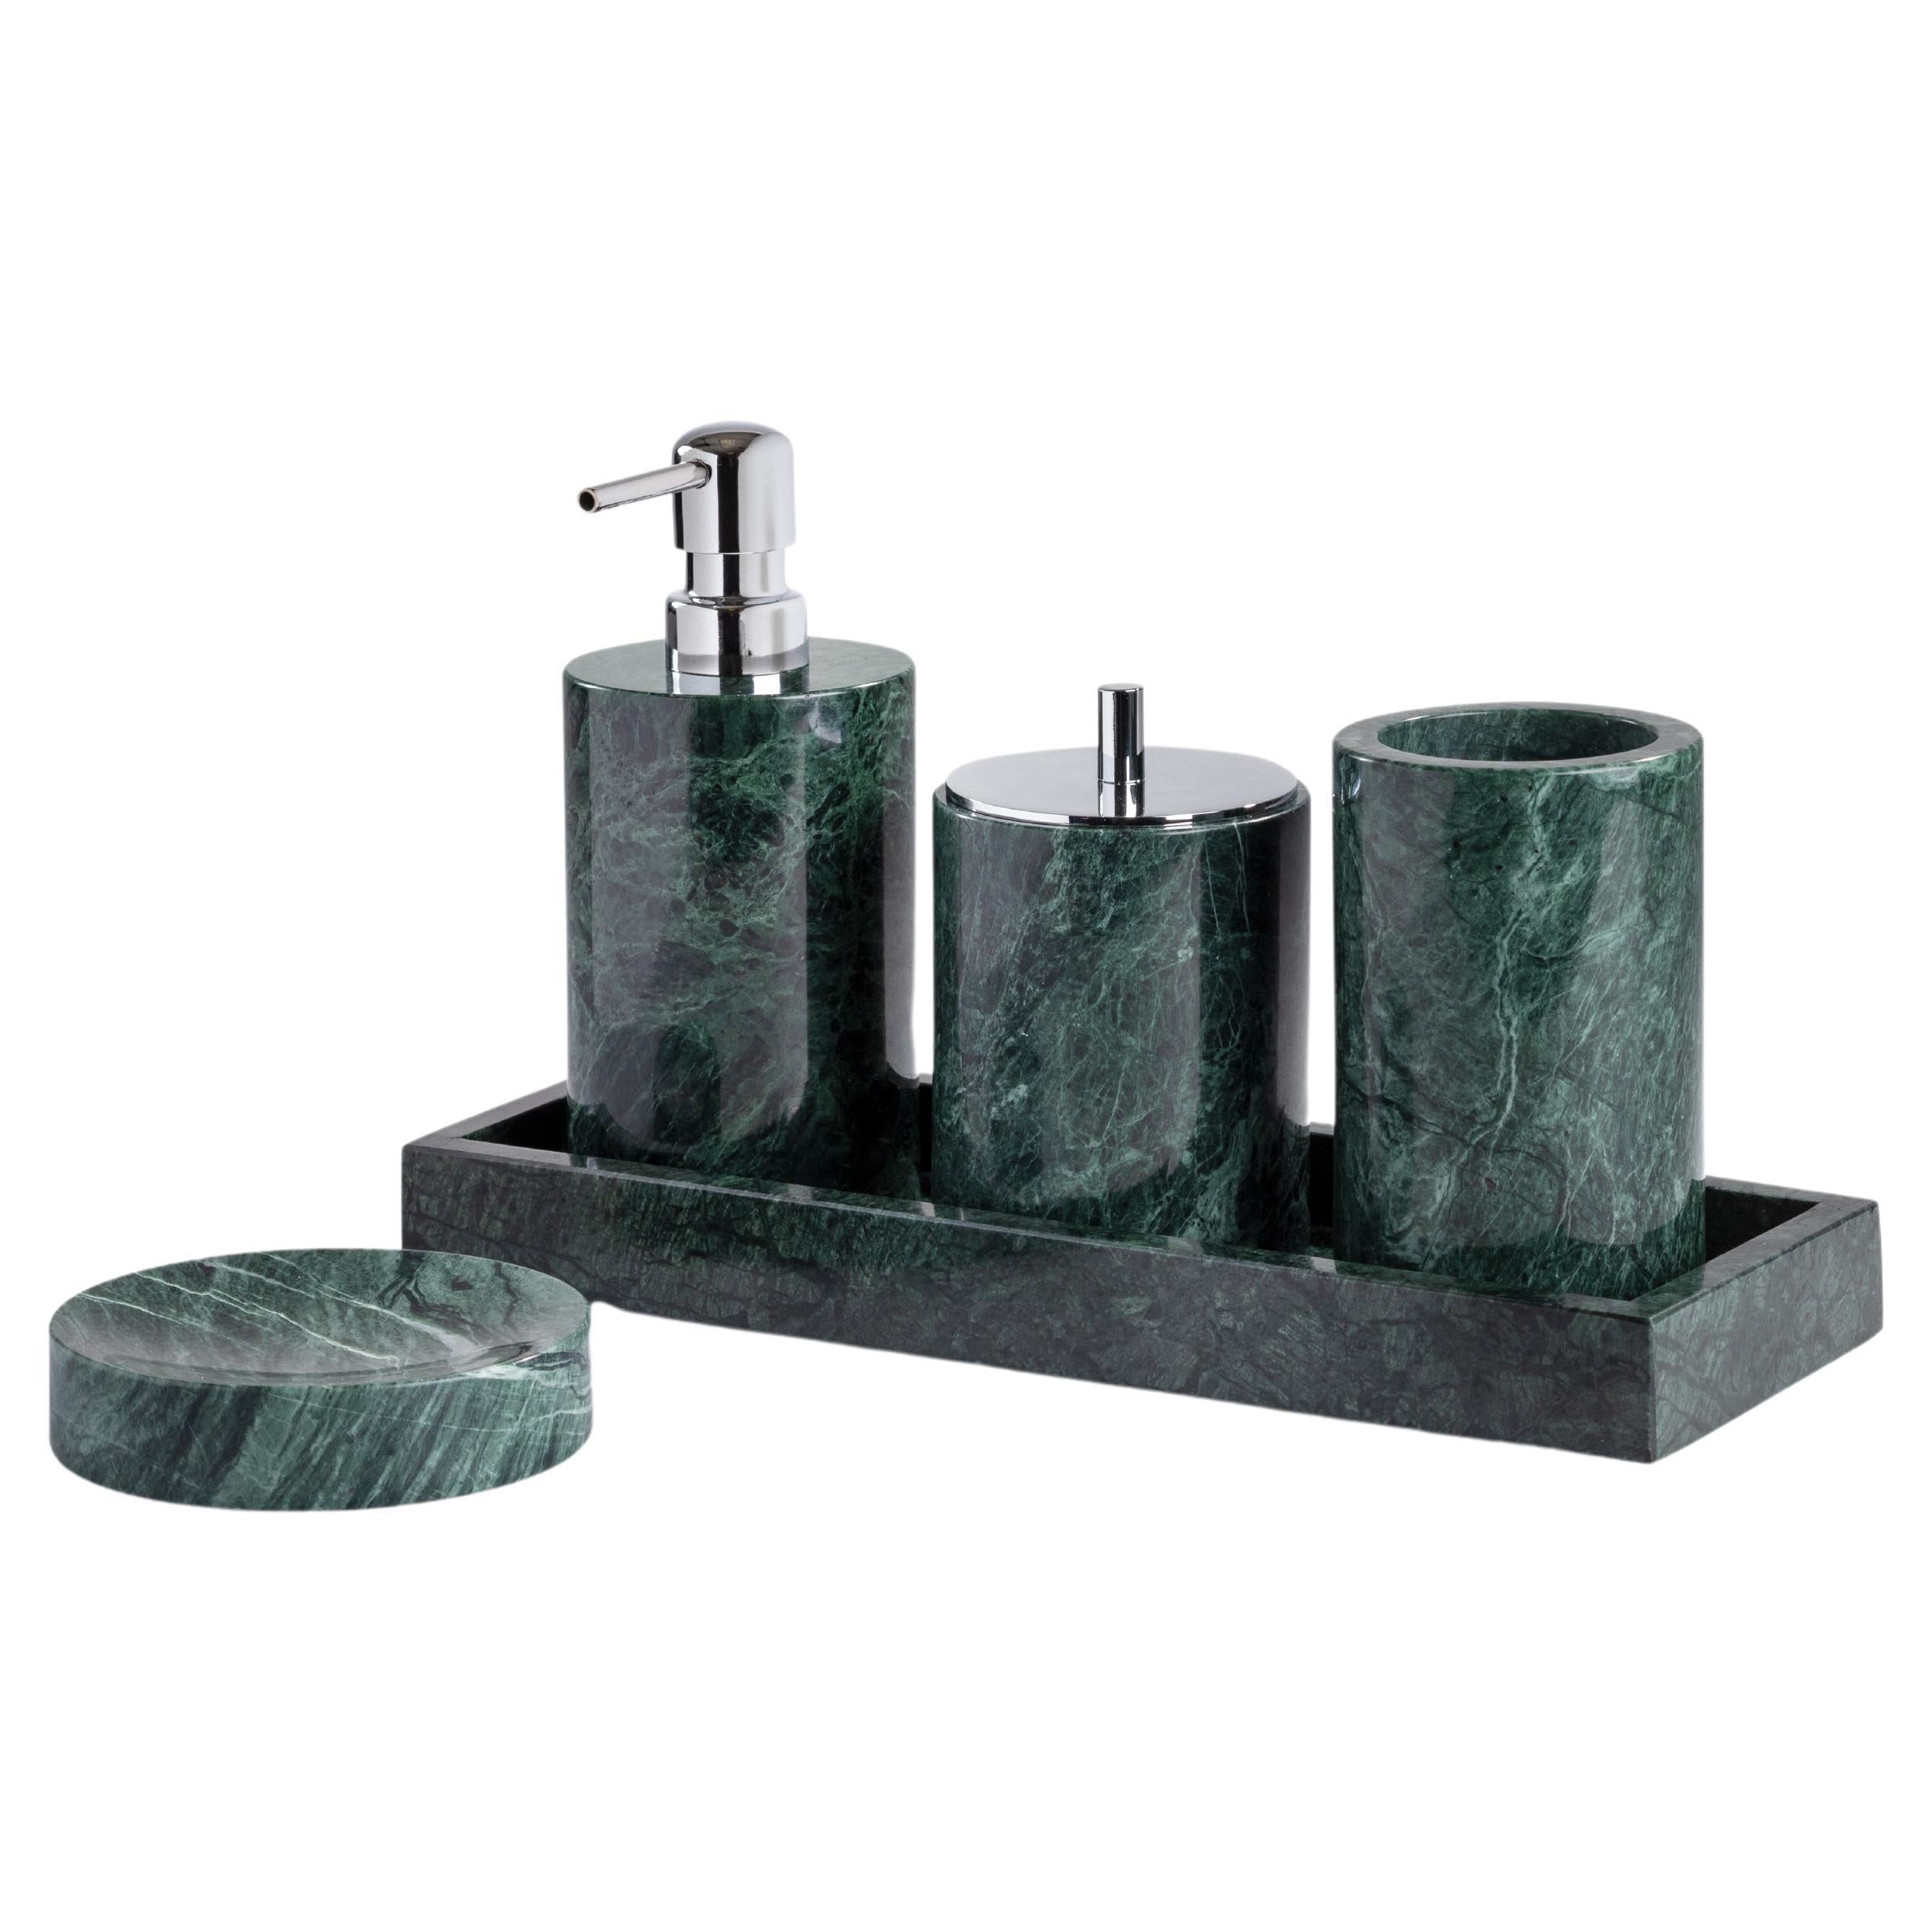 Handgefertigtes Bad-Set aus grünem Marmor